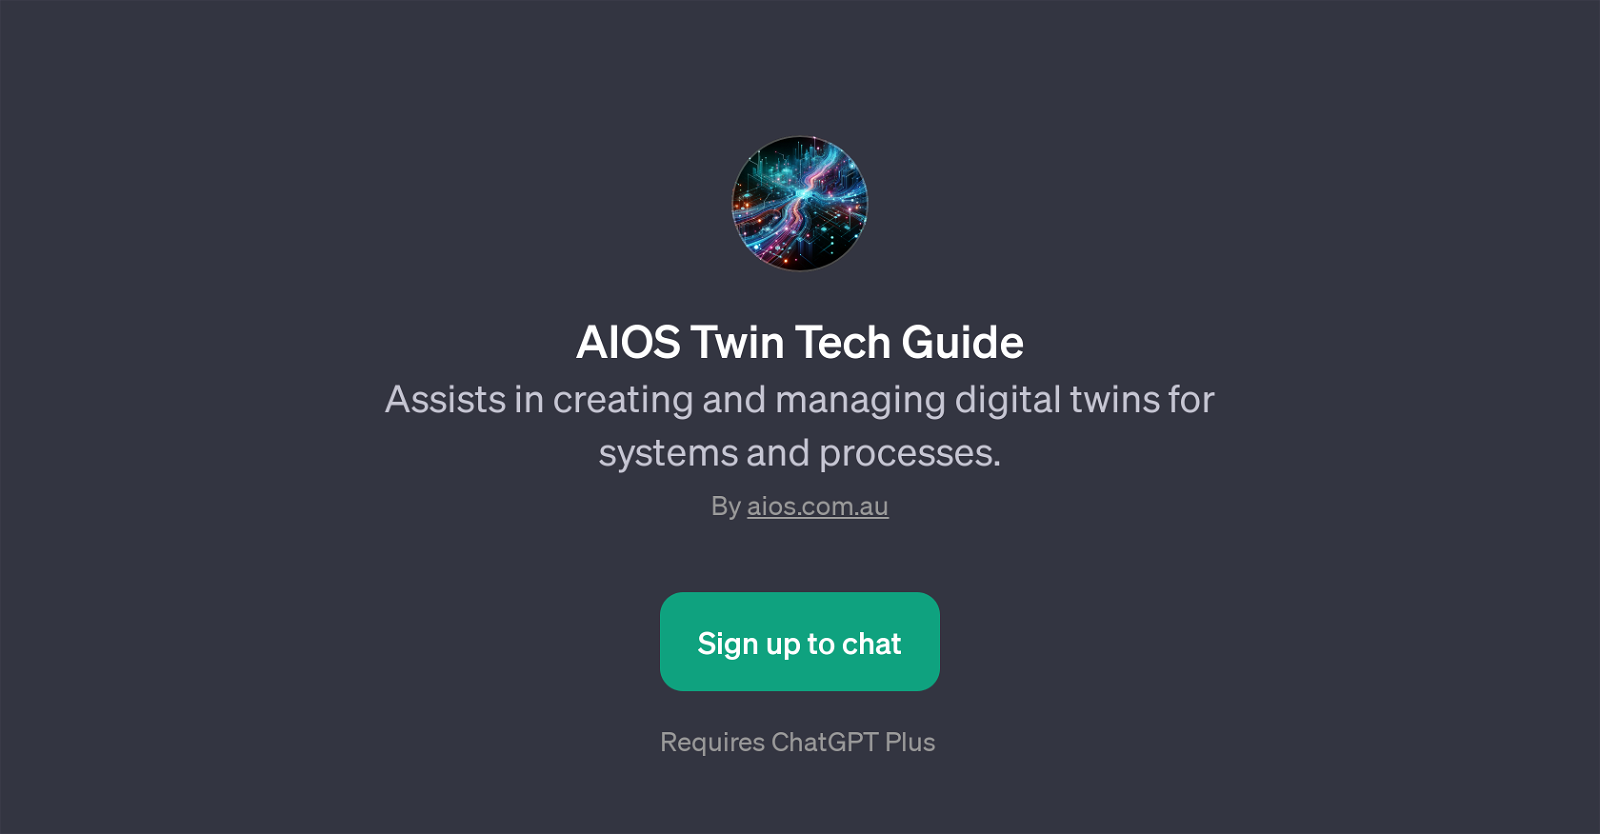 AIOS Twin Tech Guide website